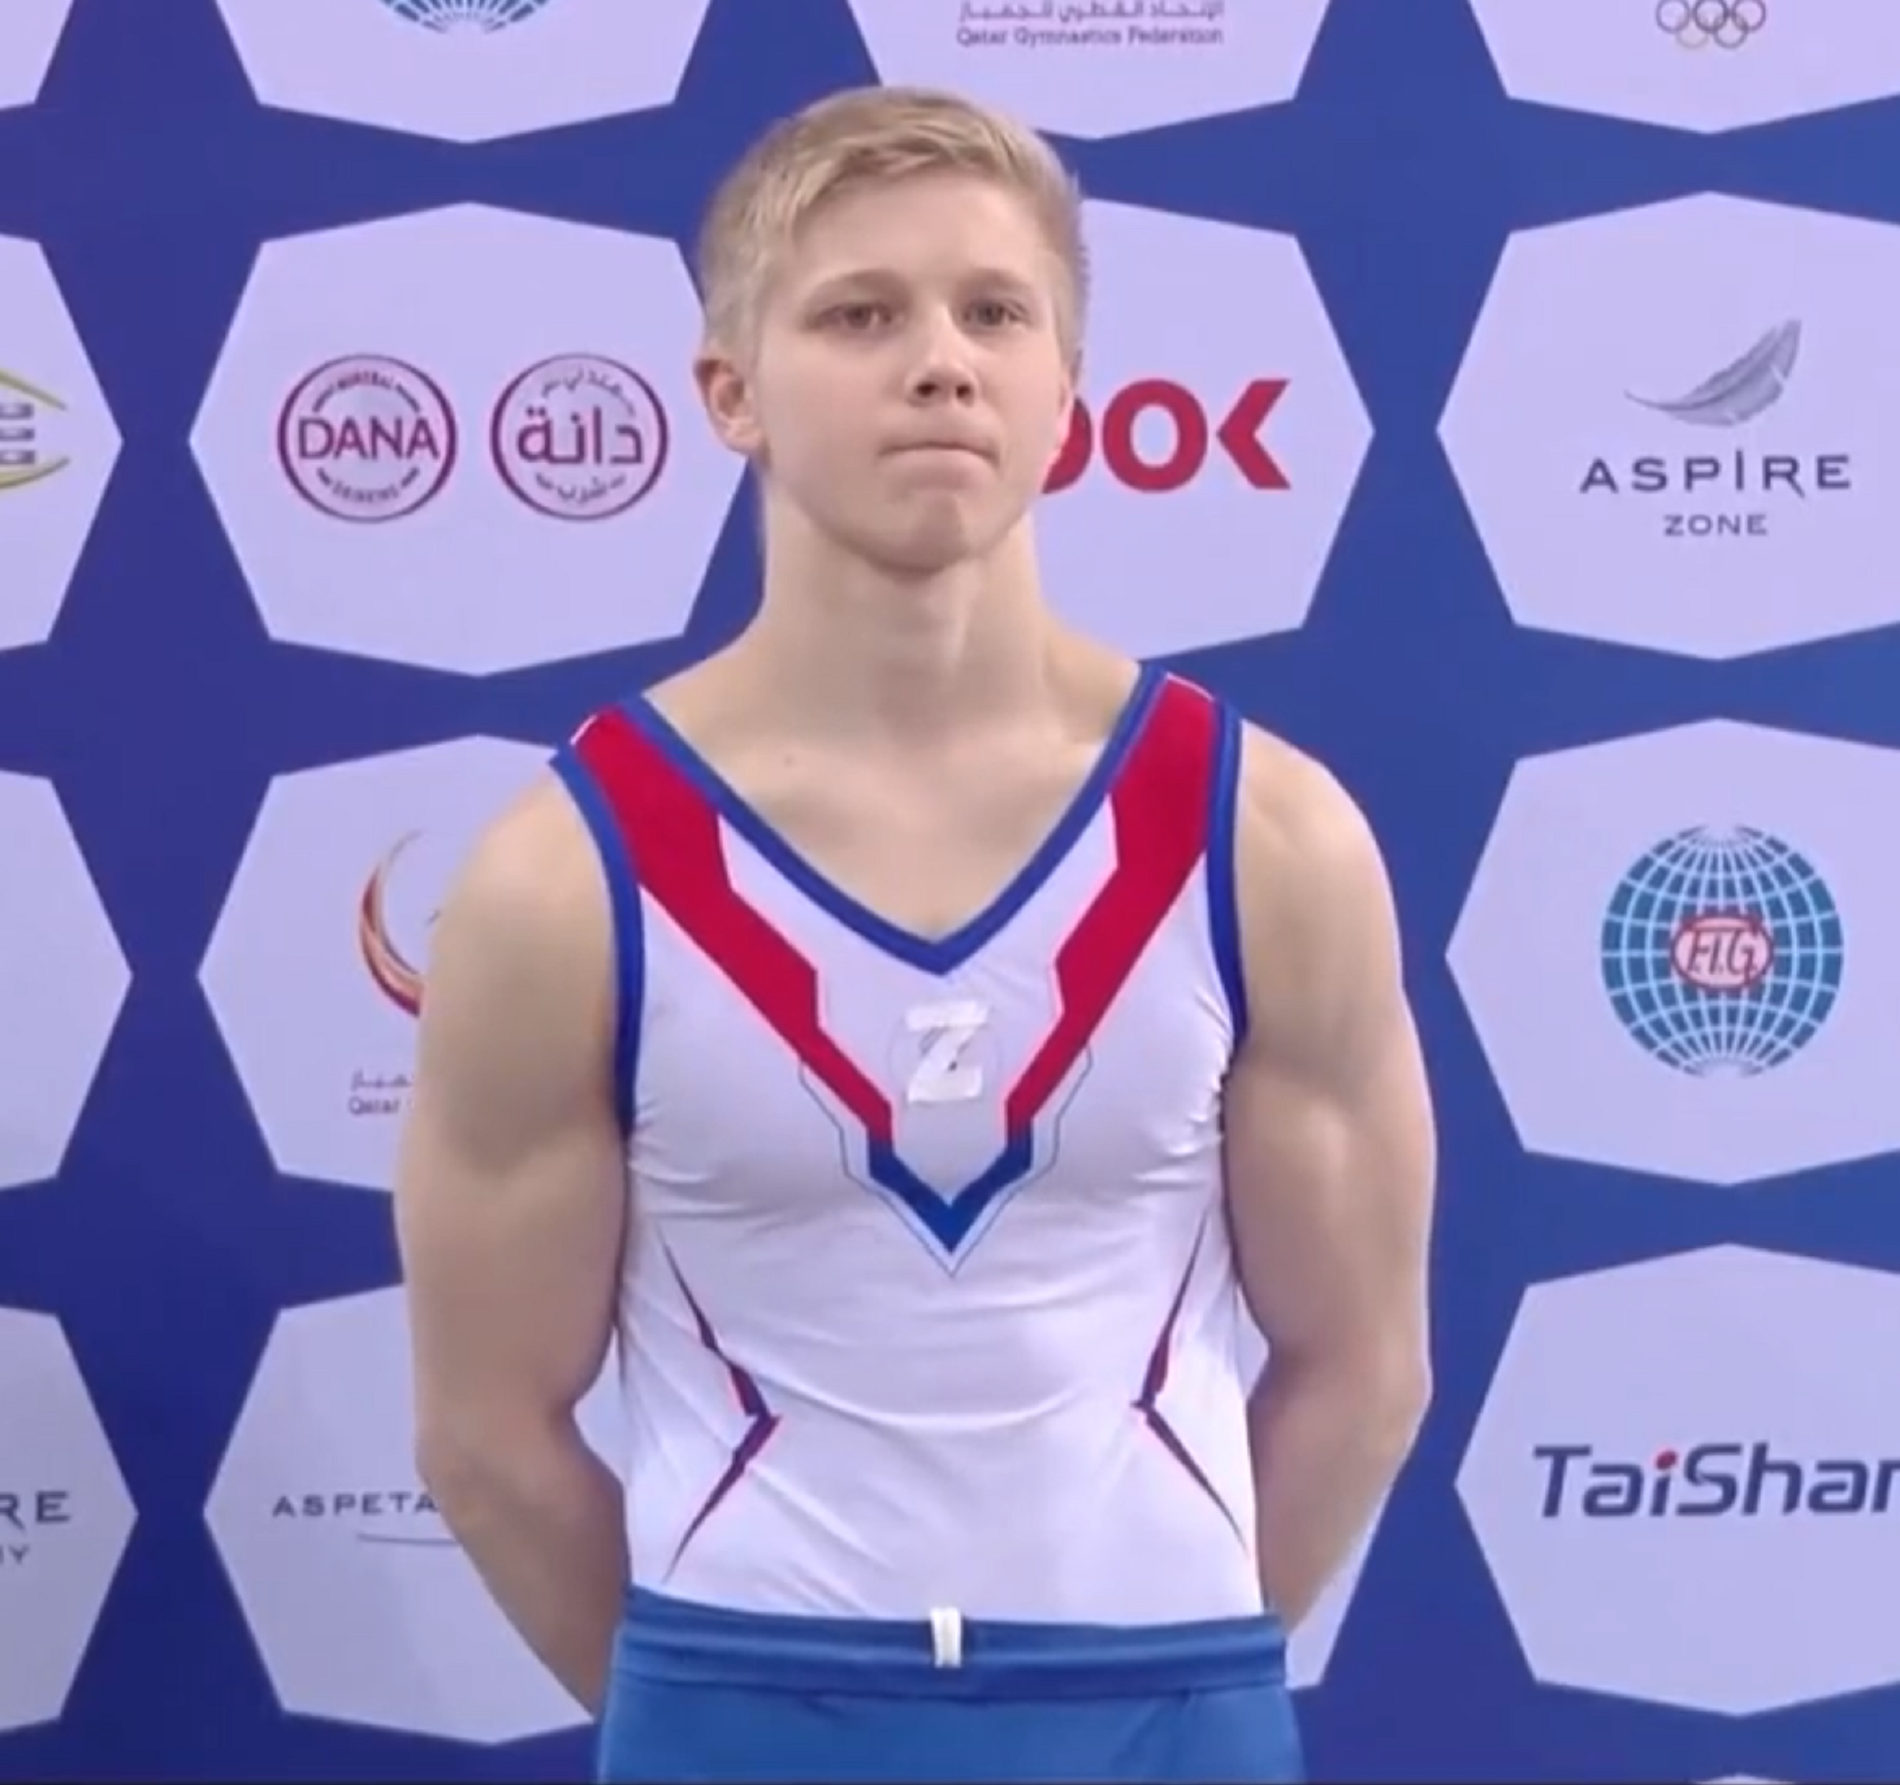 Sancionen per un any un gimnasta rus que va exhibir una 'Z' al podi